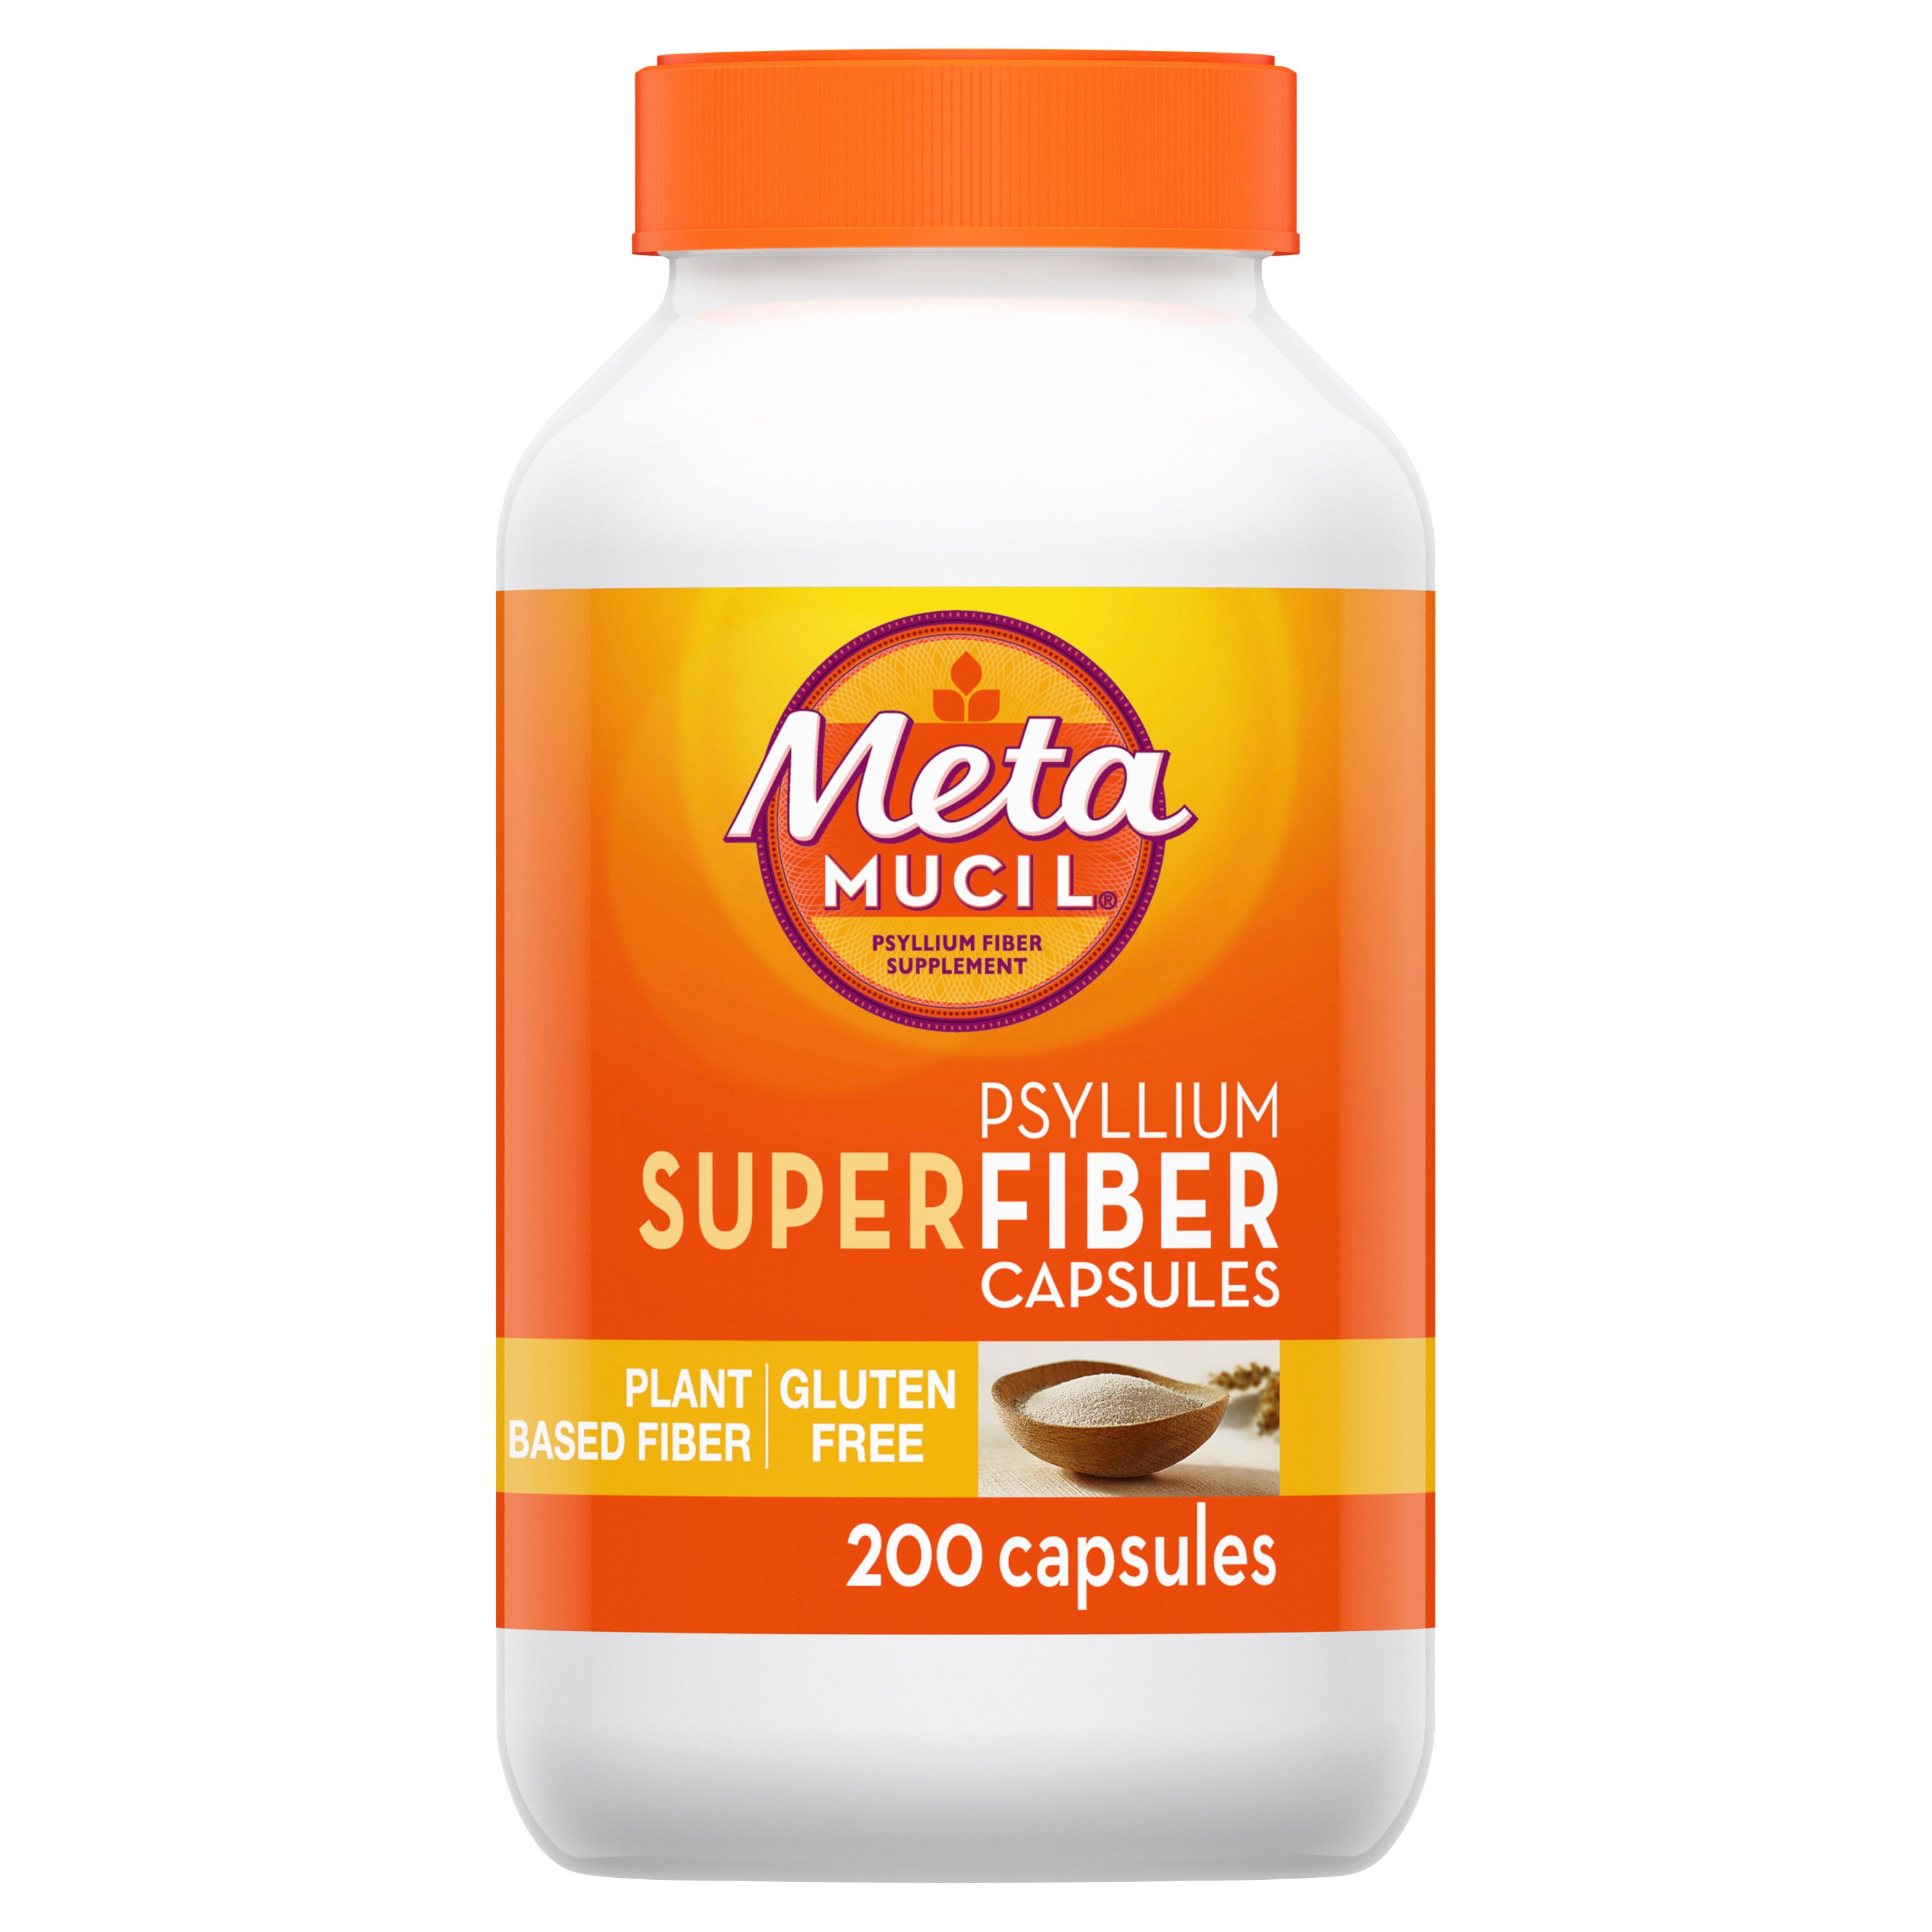 Metamucil SuperFiber Supplement Powder, Gluten Free and Sugar Free, 100% Natural Psyllium Fiber, Capsules, 200 CT